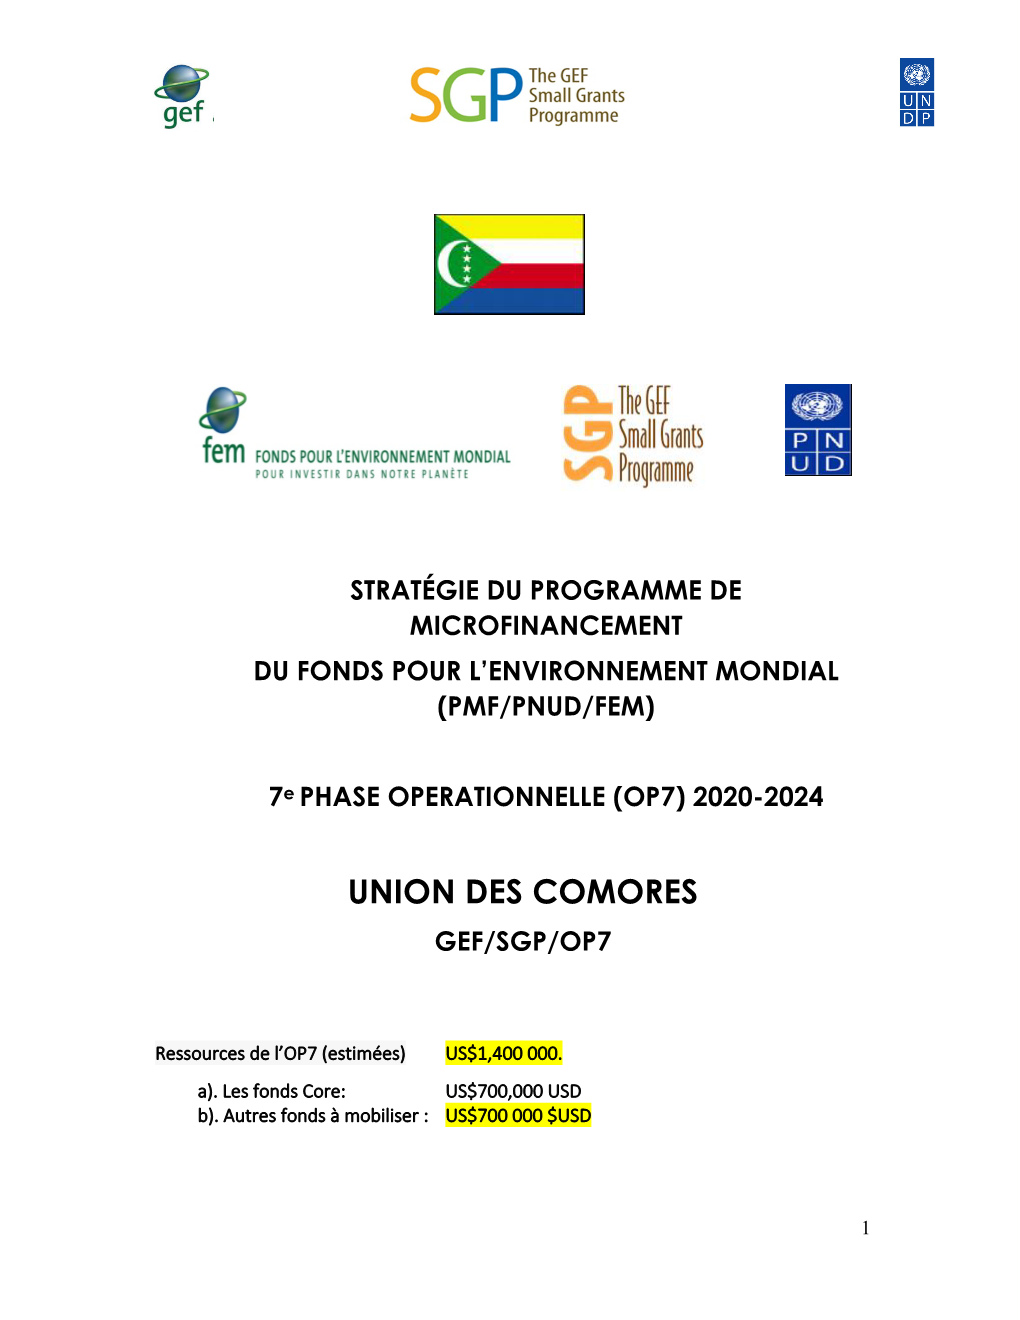 Union Des Comores Gef/Sgp/Op7